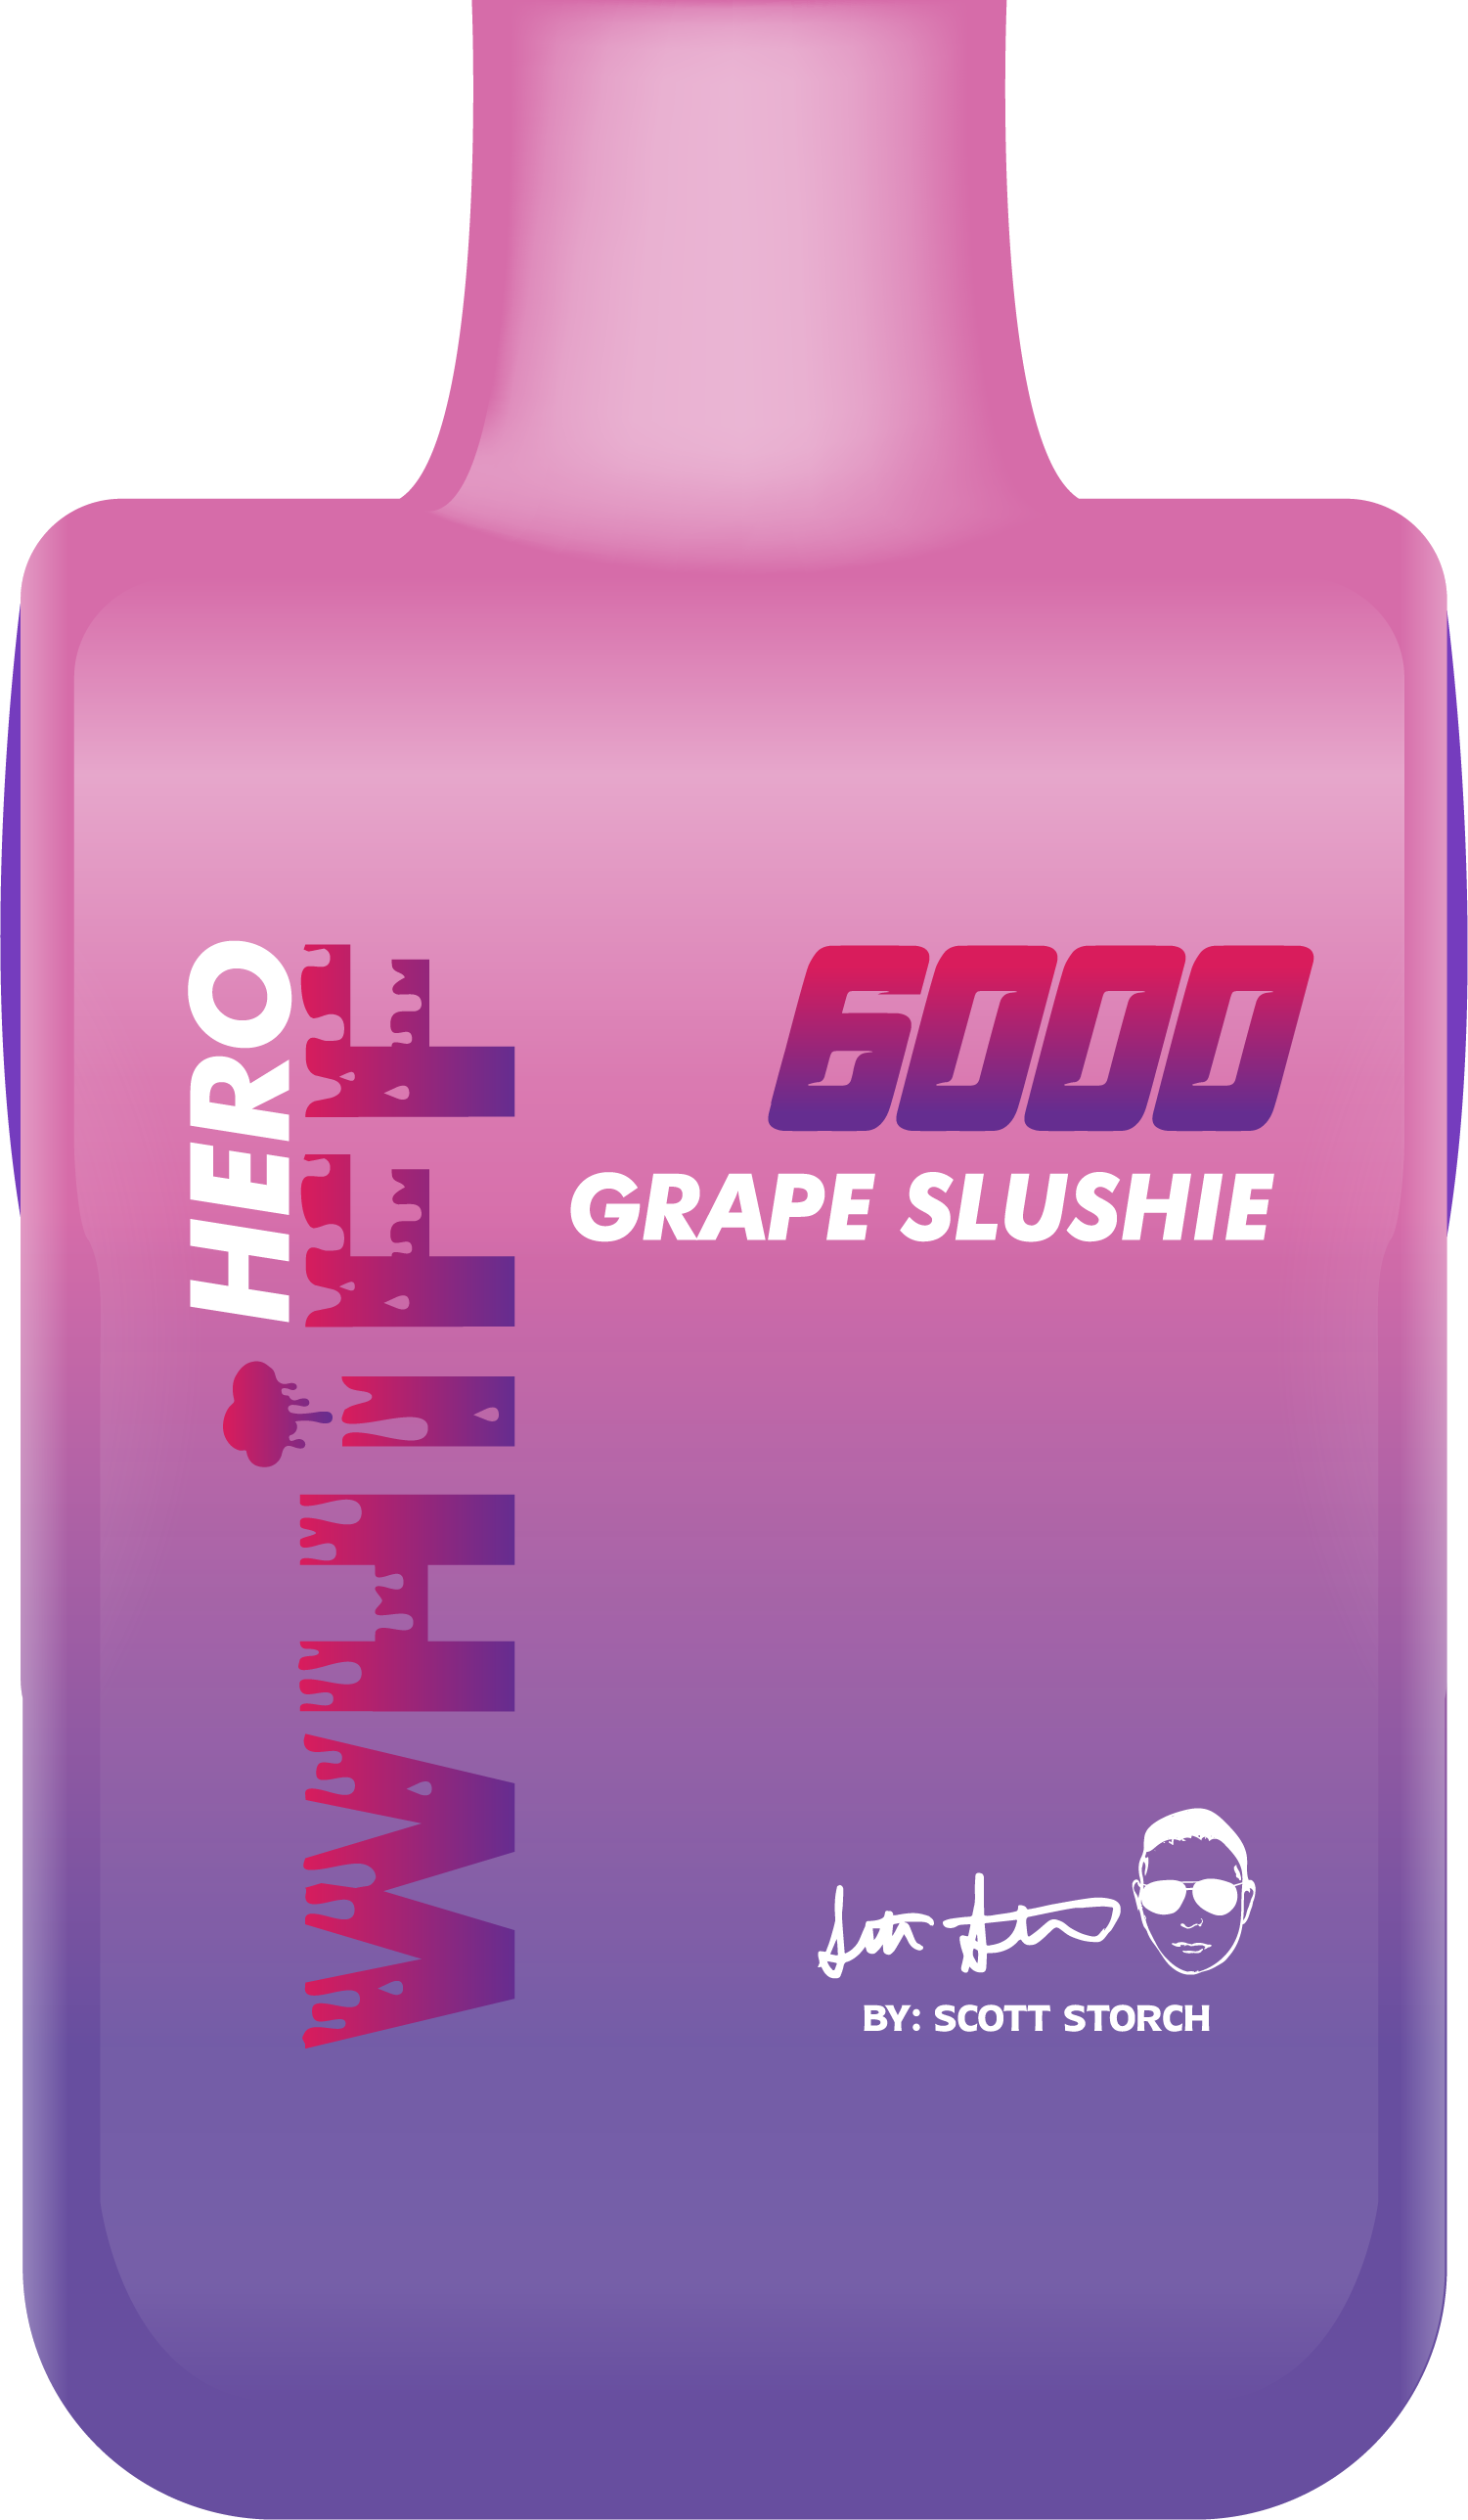 Grape Slushie